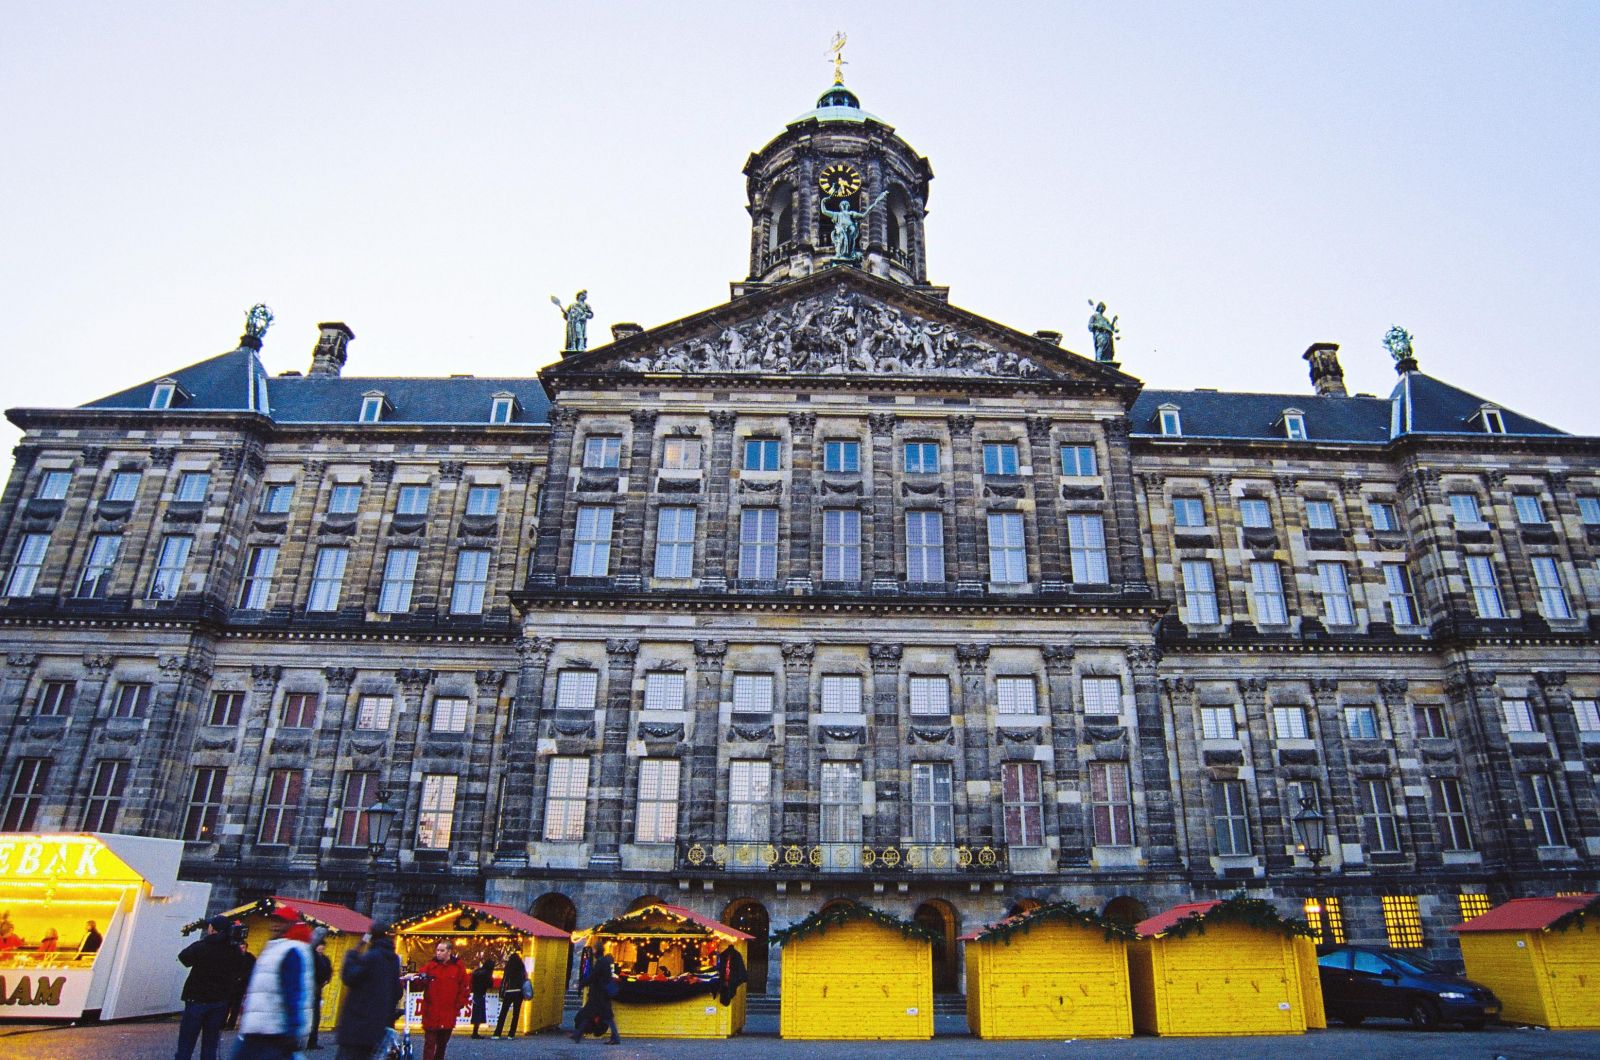 Amsterdam – loanh quanh phố thị